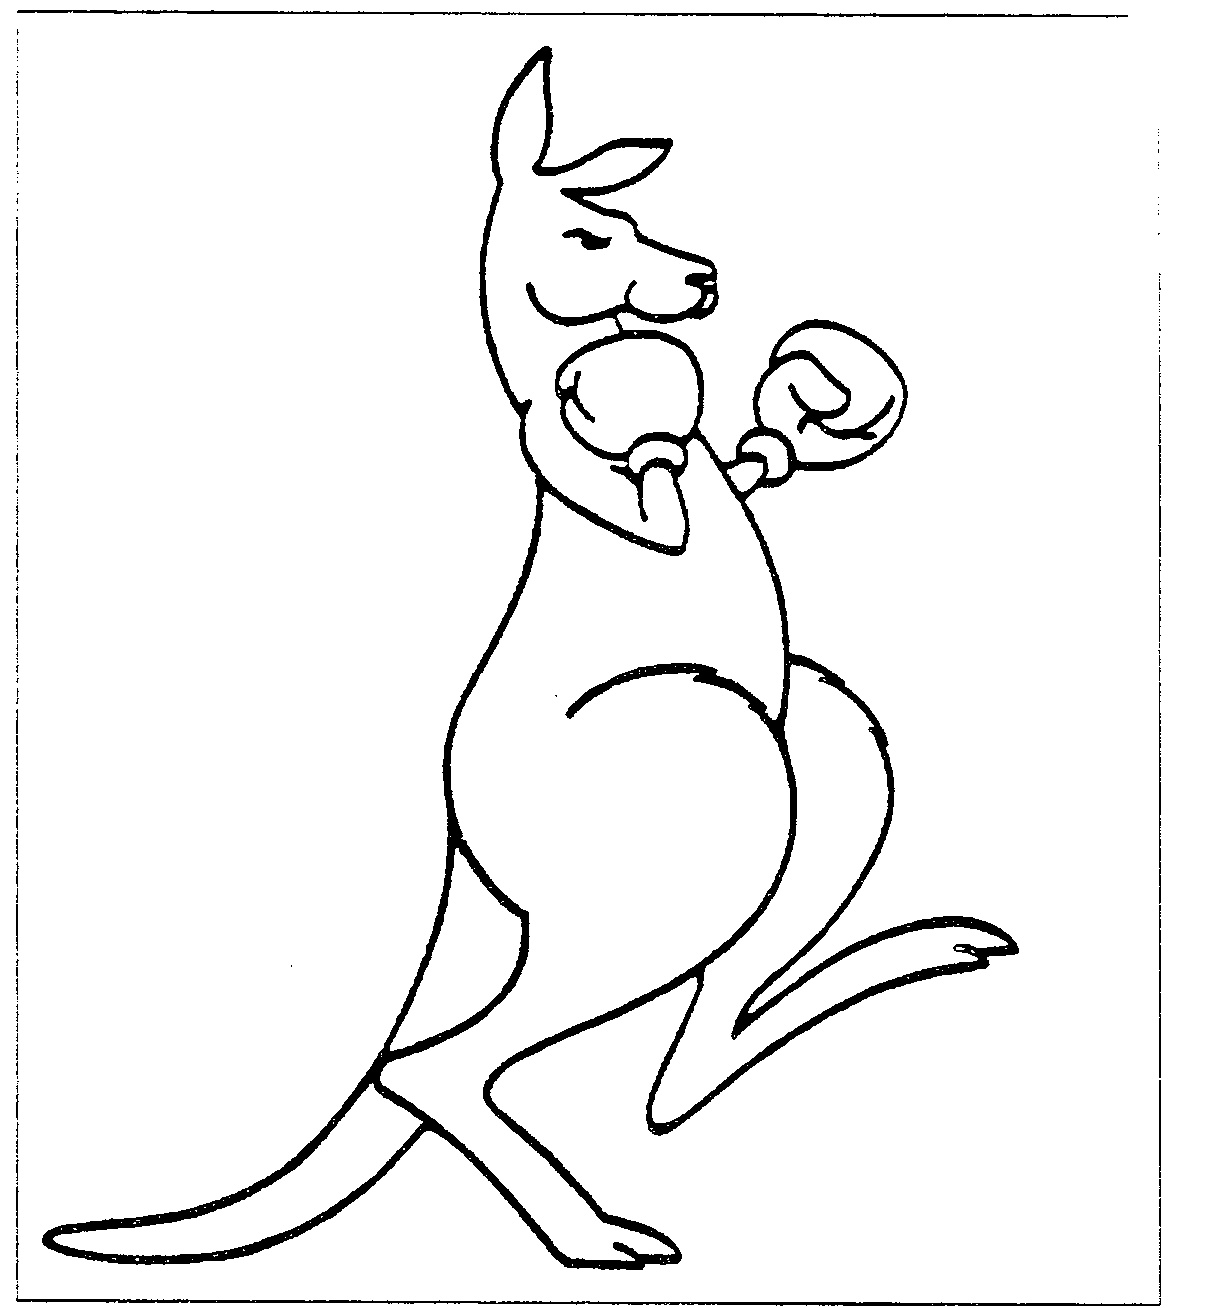 kangaroo clipart black and white - photo #46